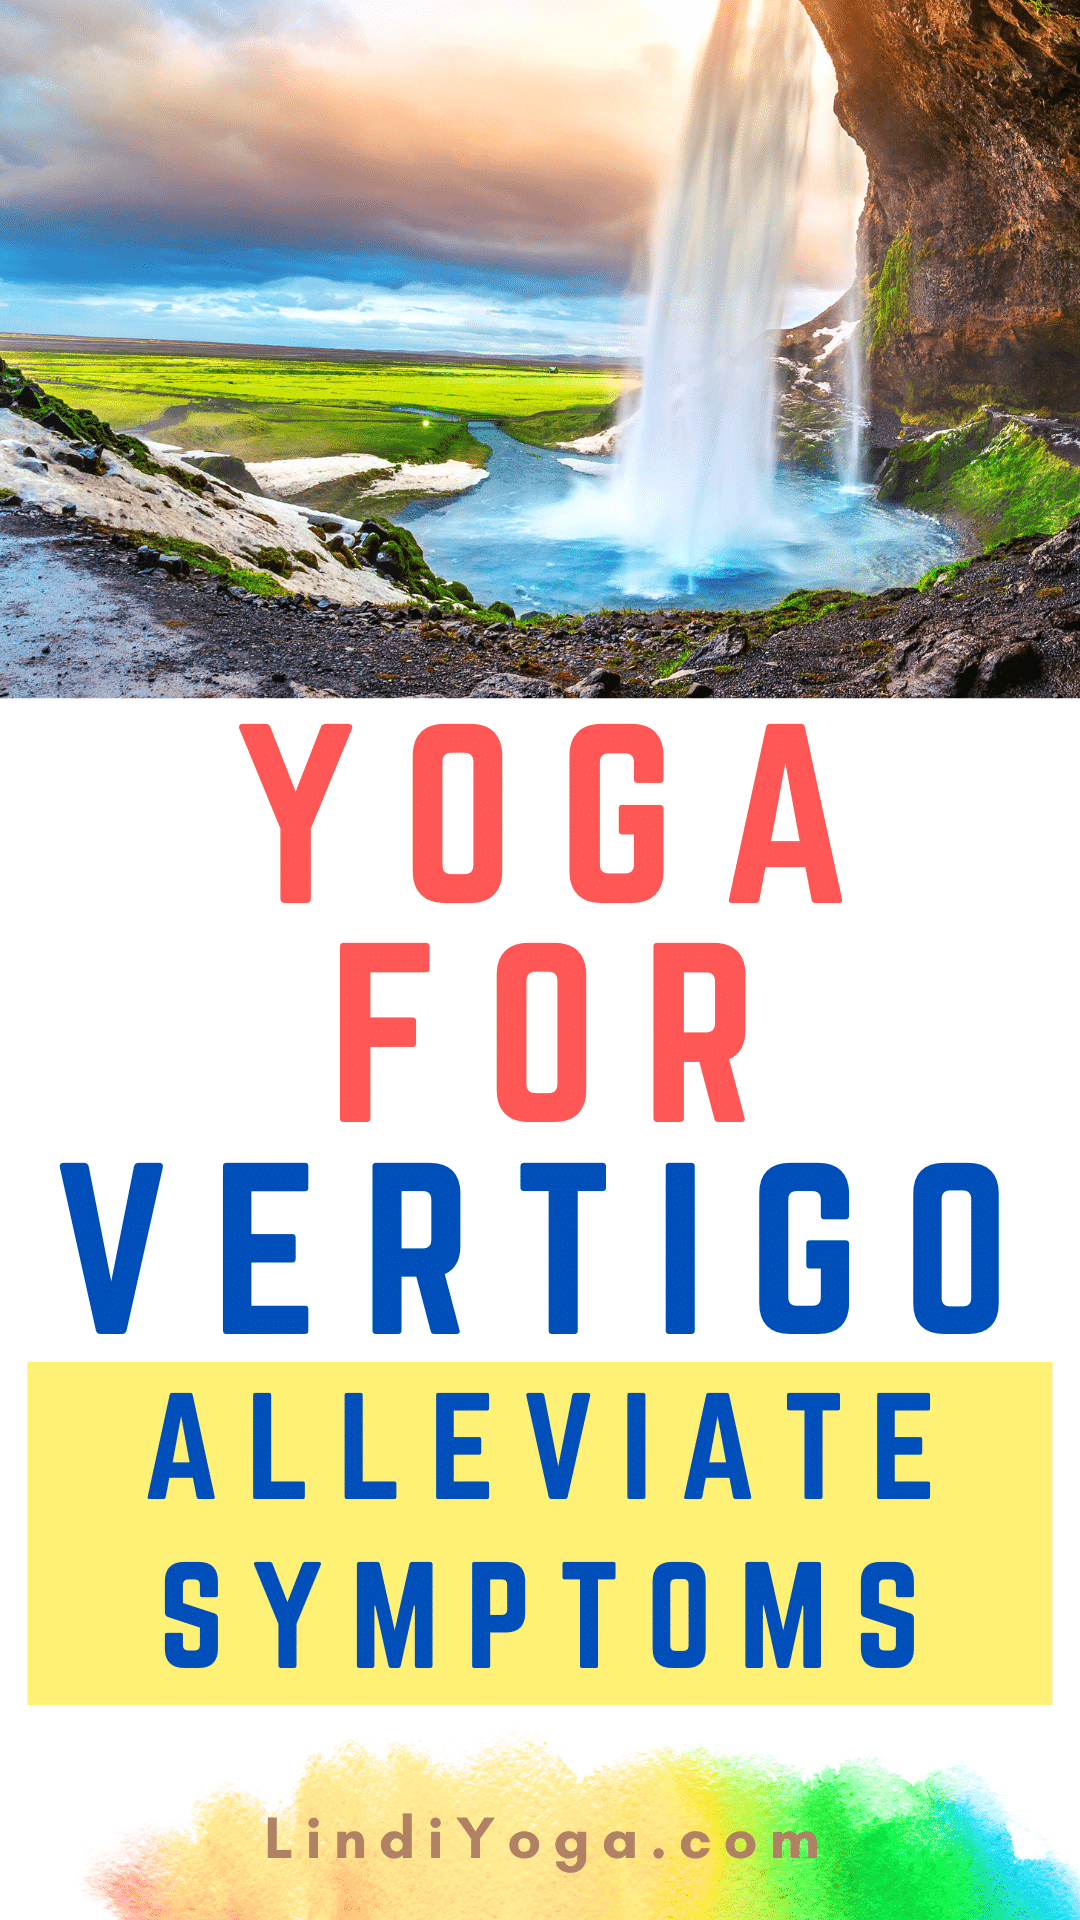 Yoga for Vertigo Exercise / Canva